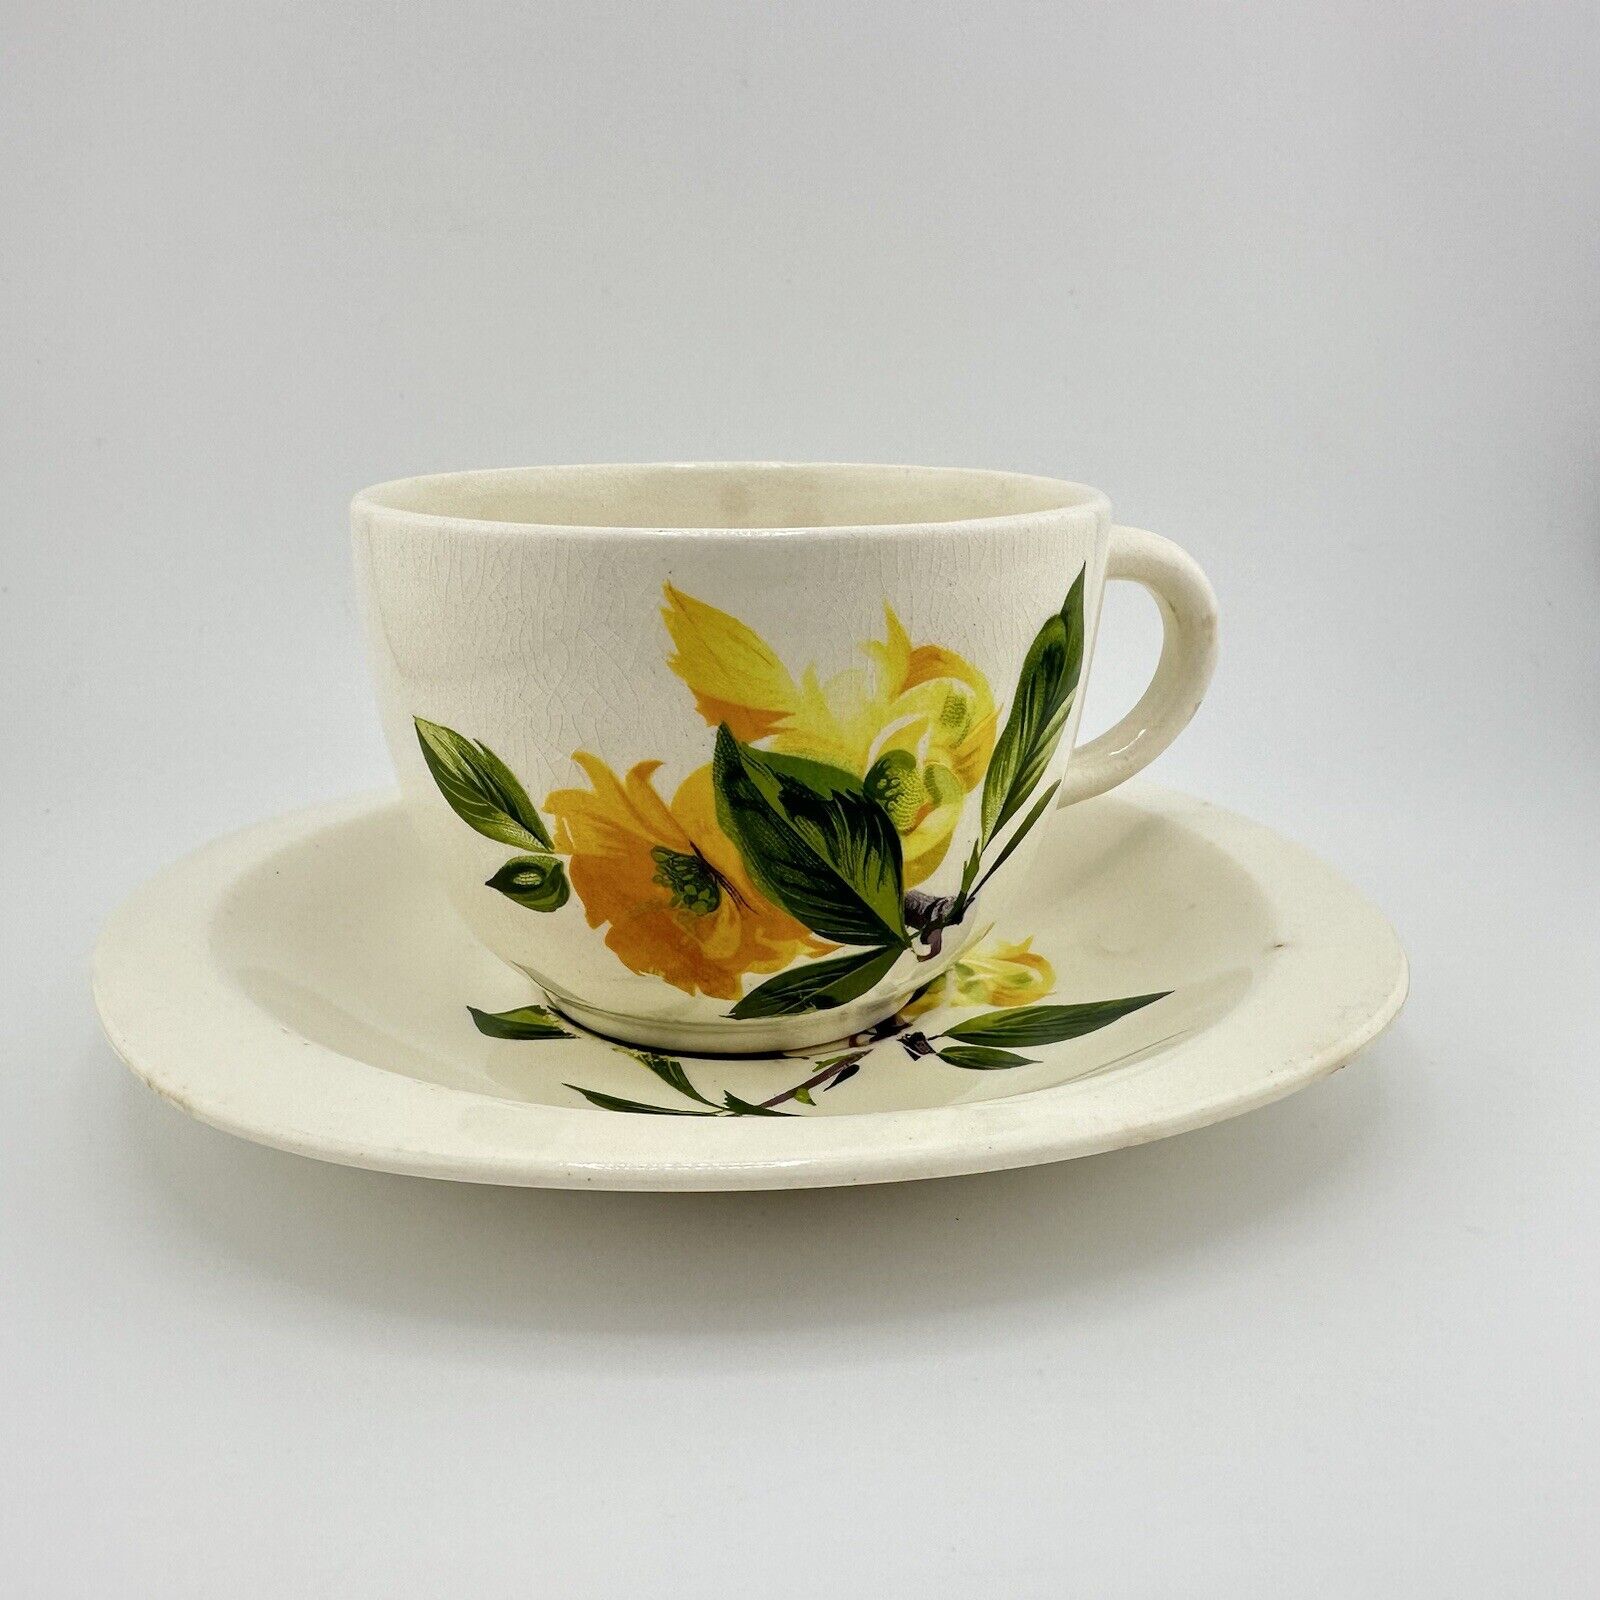 Vintage Royal Swan England Yellow Rose Flower Teacup Saucer Set